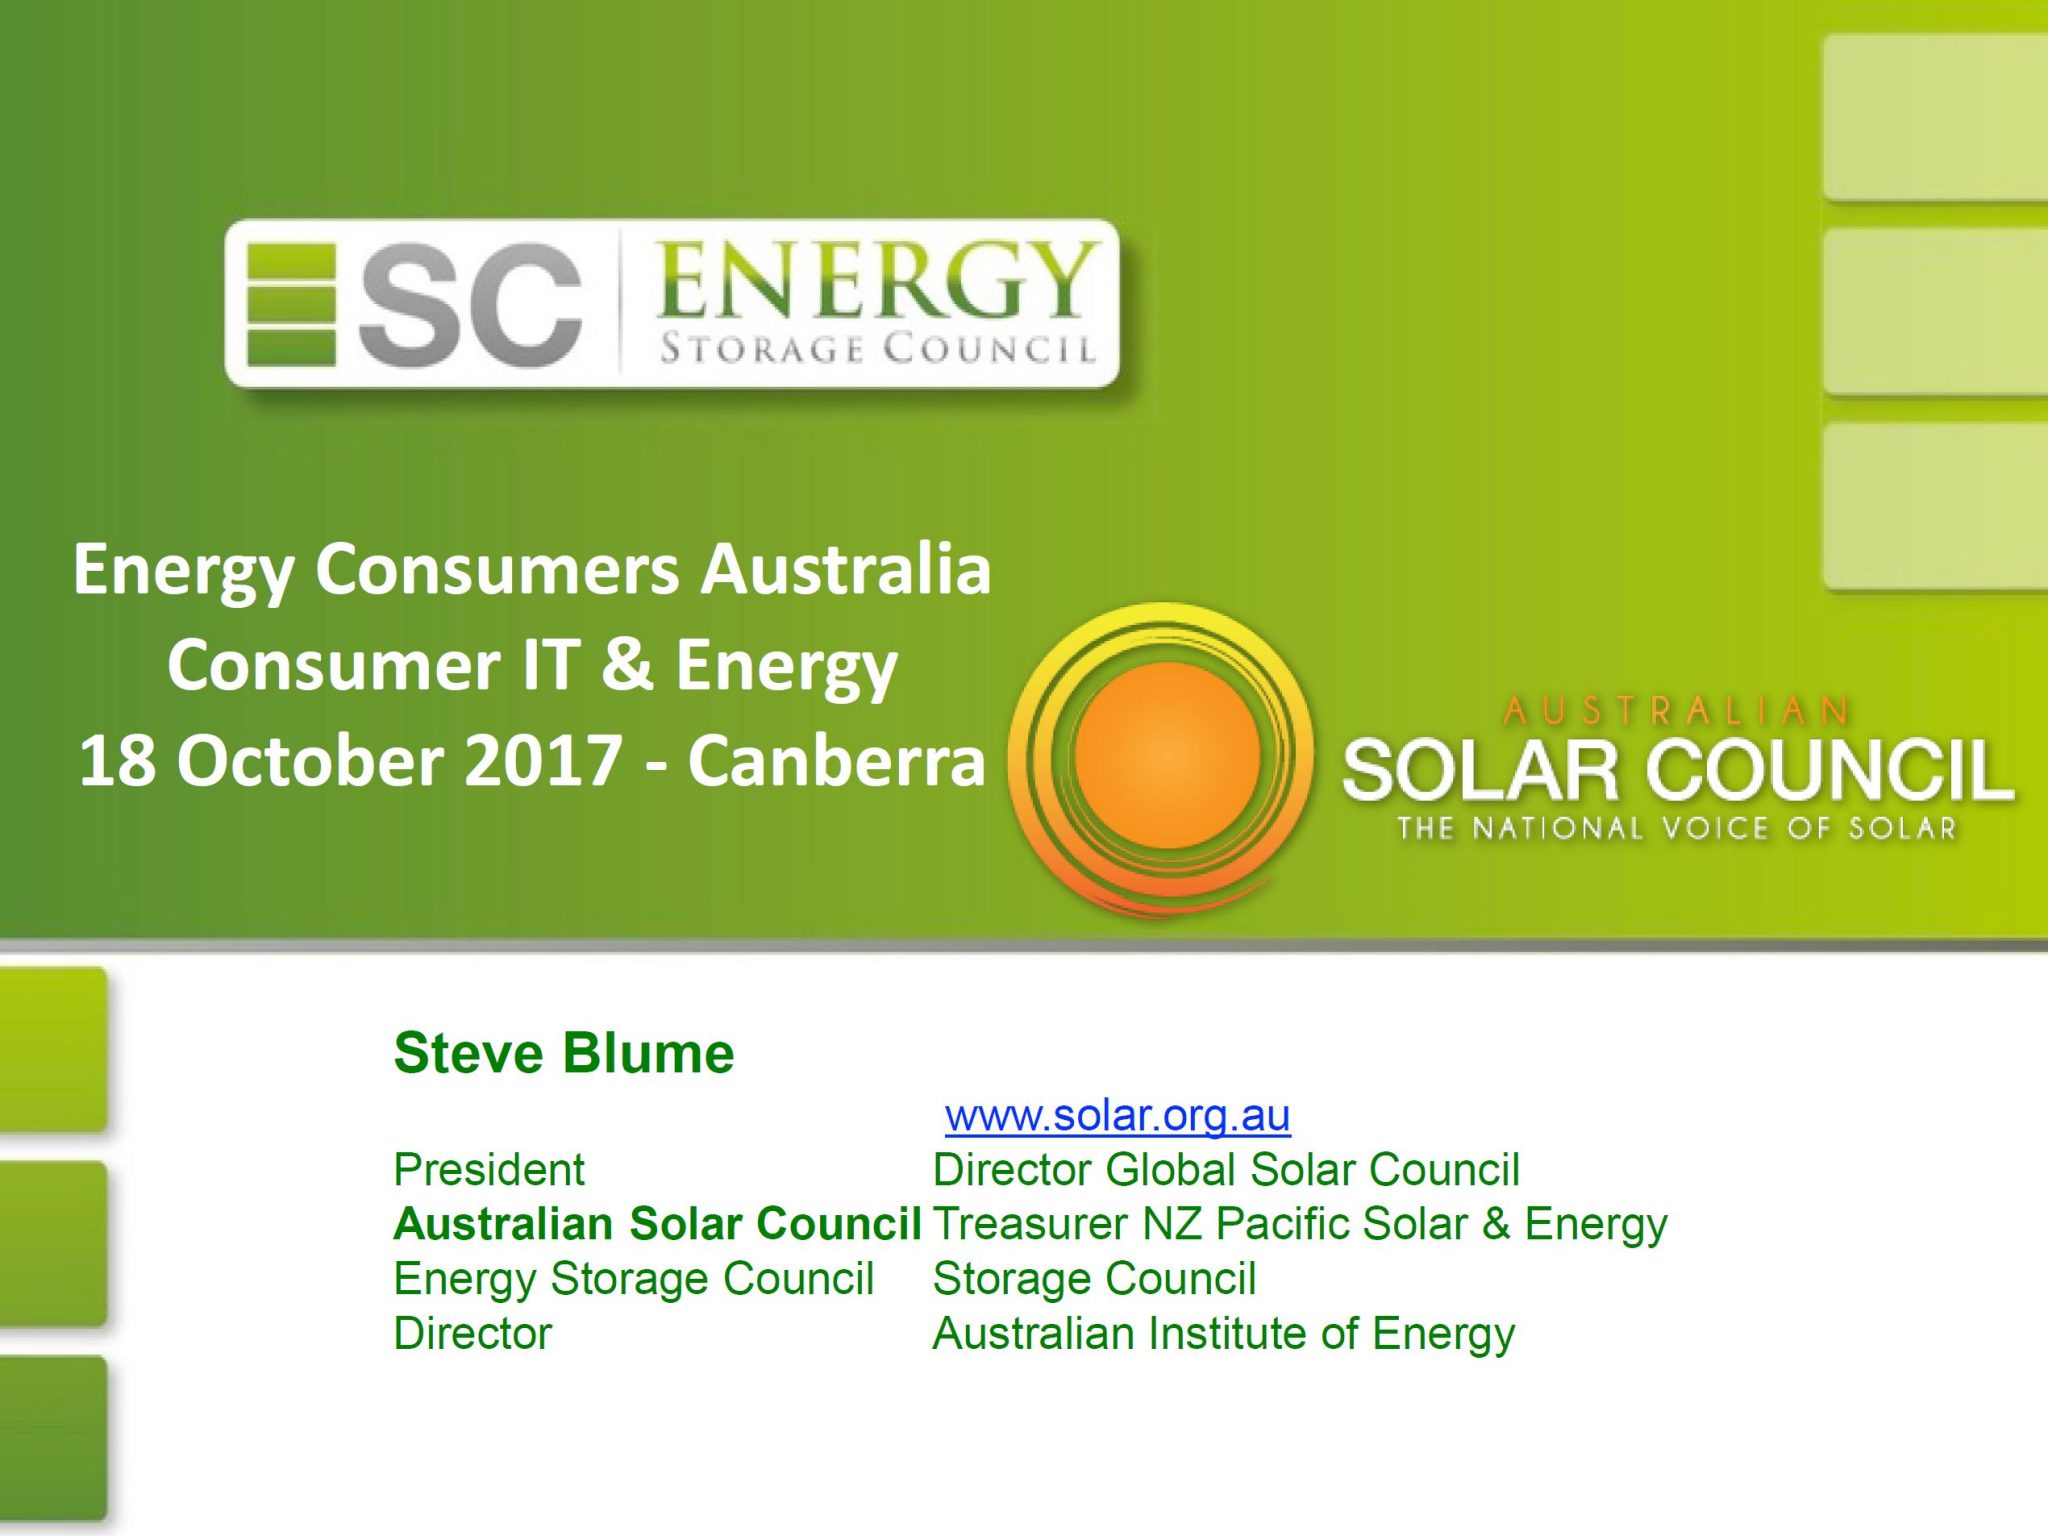 Consumer IT and Energy: Steve Blume